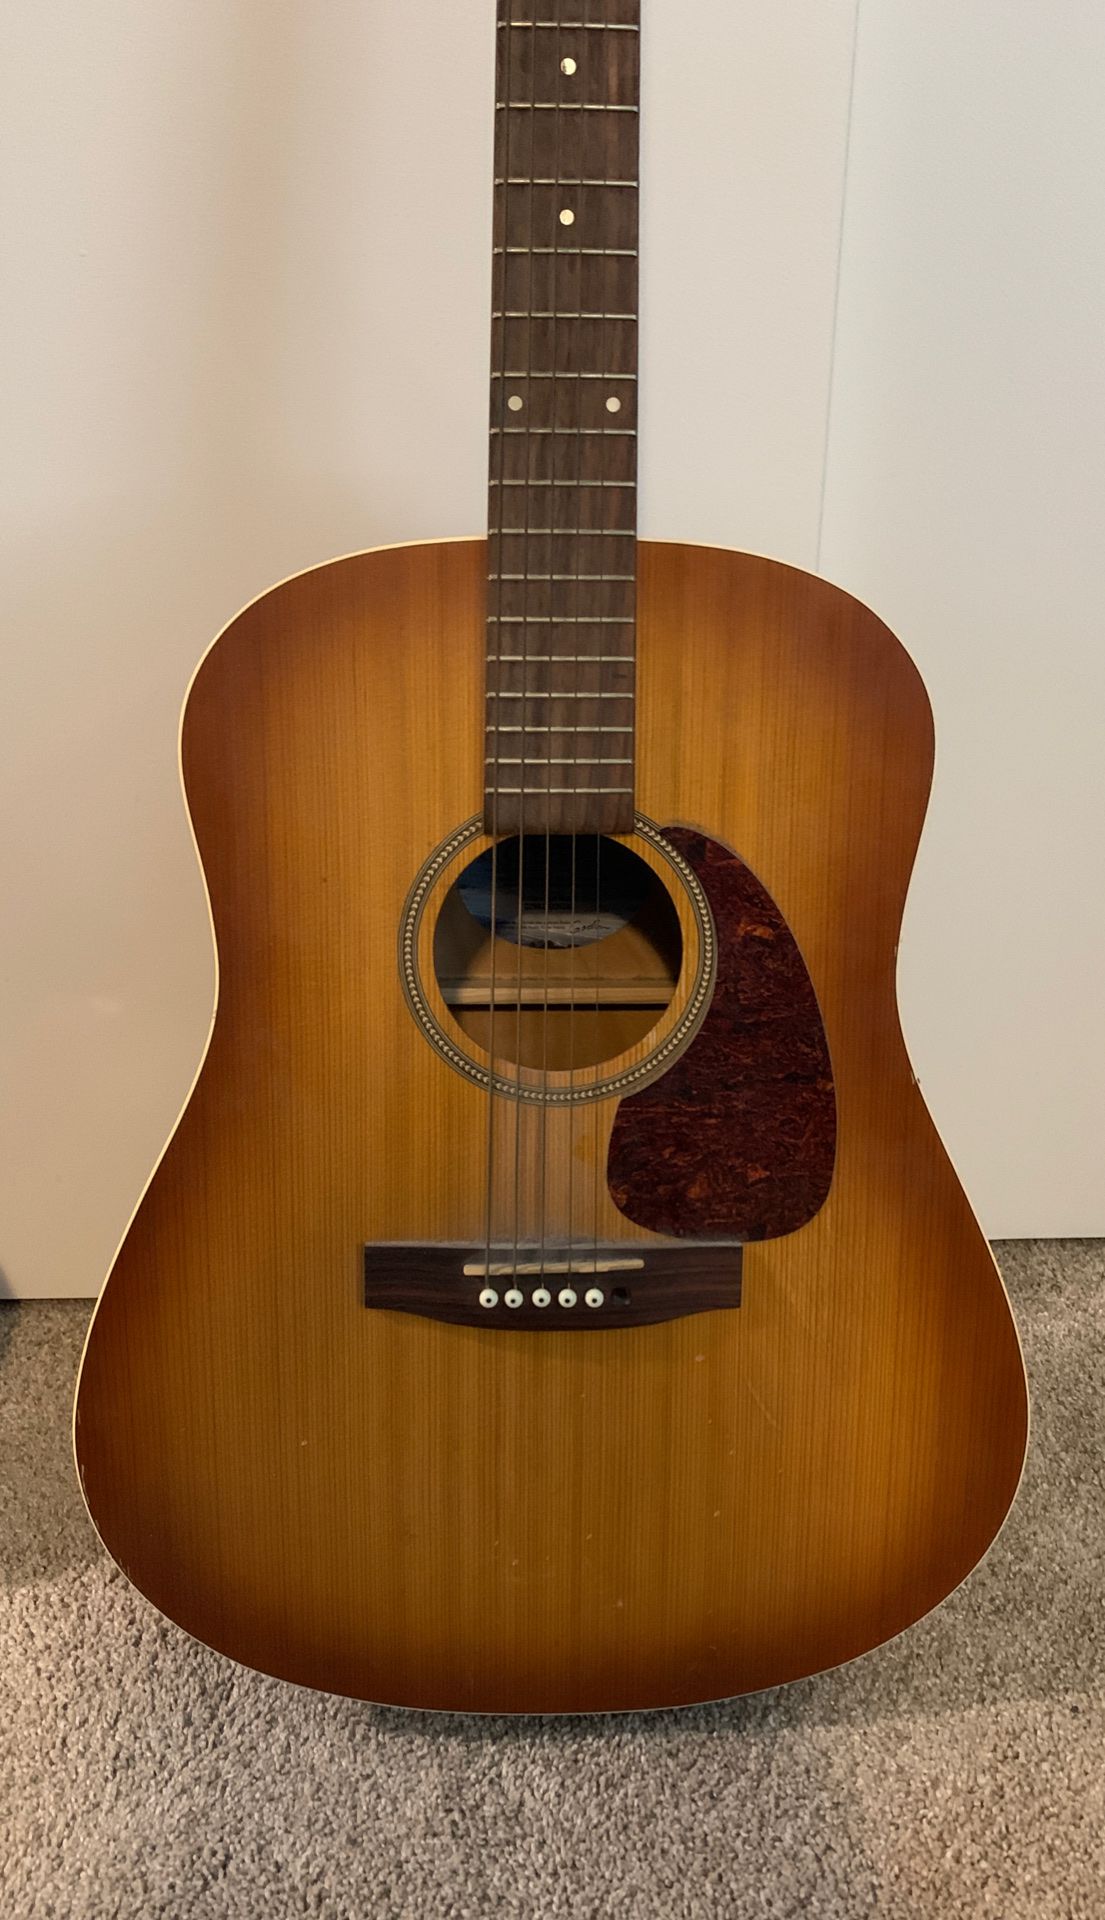 Seagull acoustic guitar